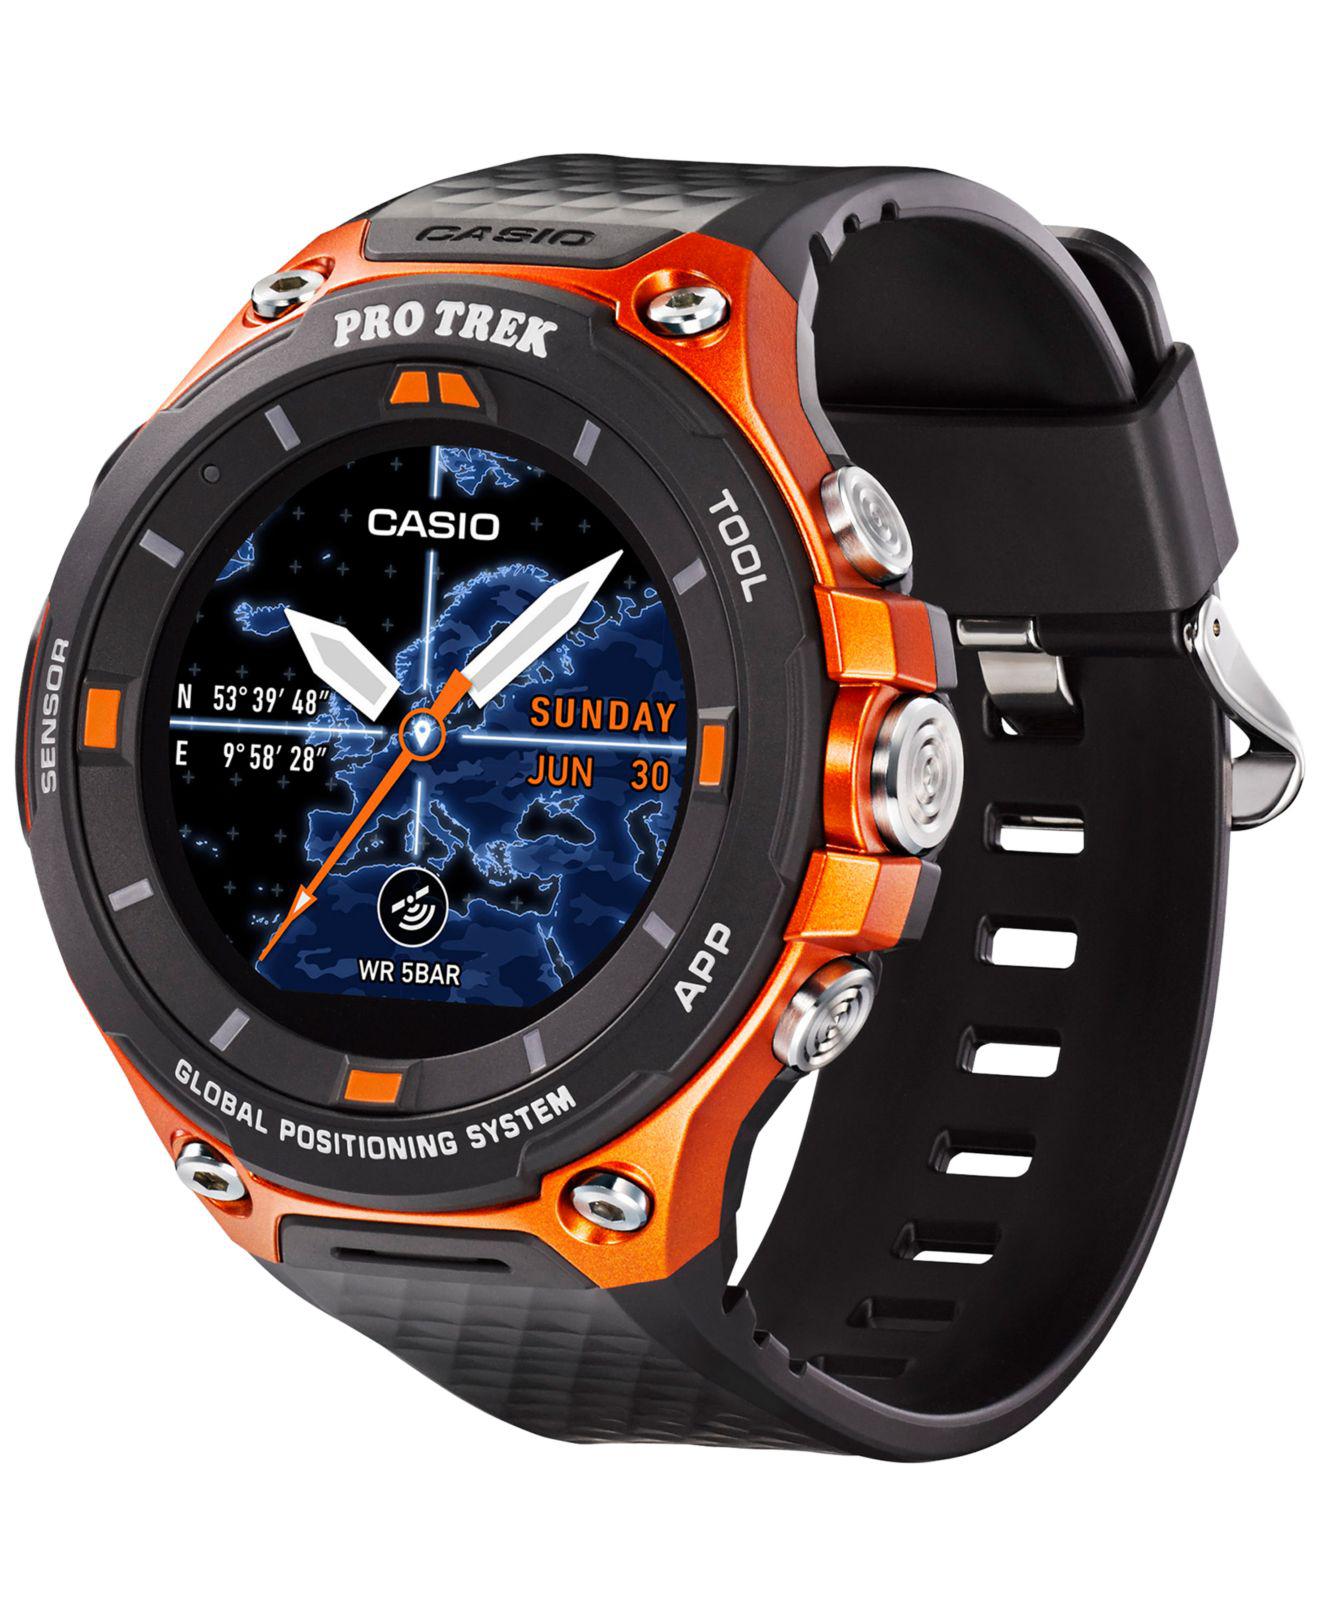 G Shock BlackOrange Pro Trek Black And Orange Resin Strap Smart Watch 62mm Wsd F20rg 